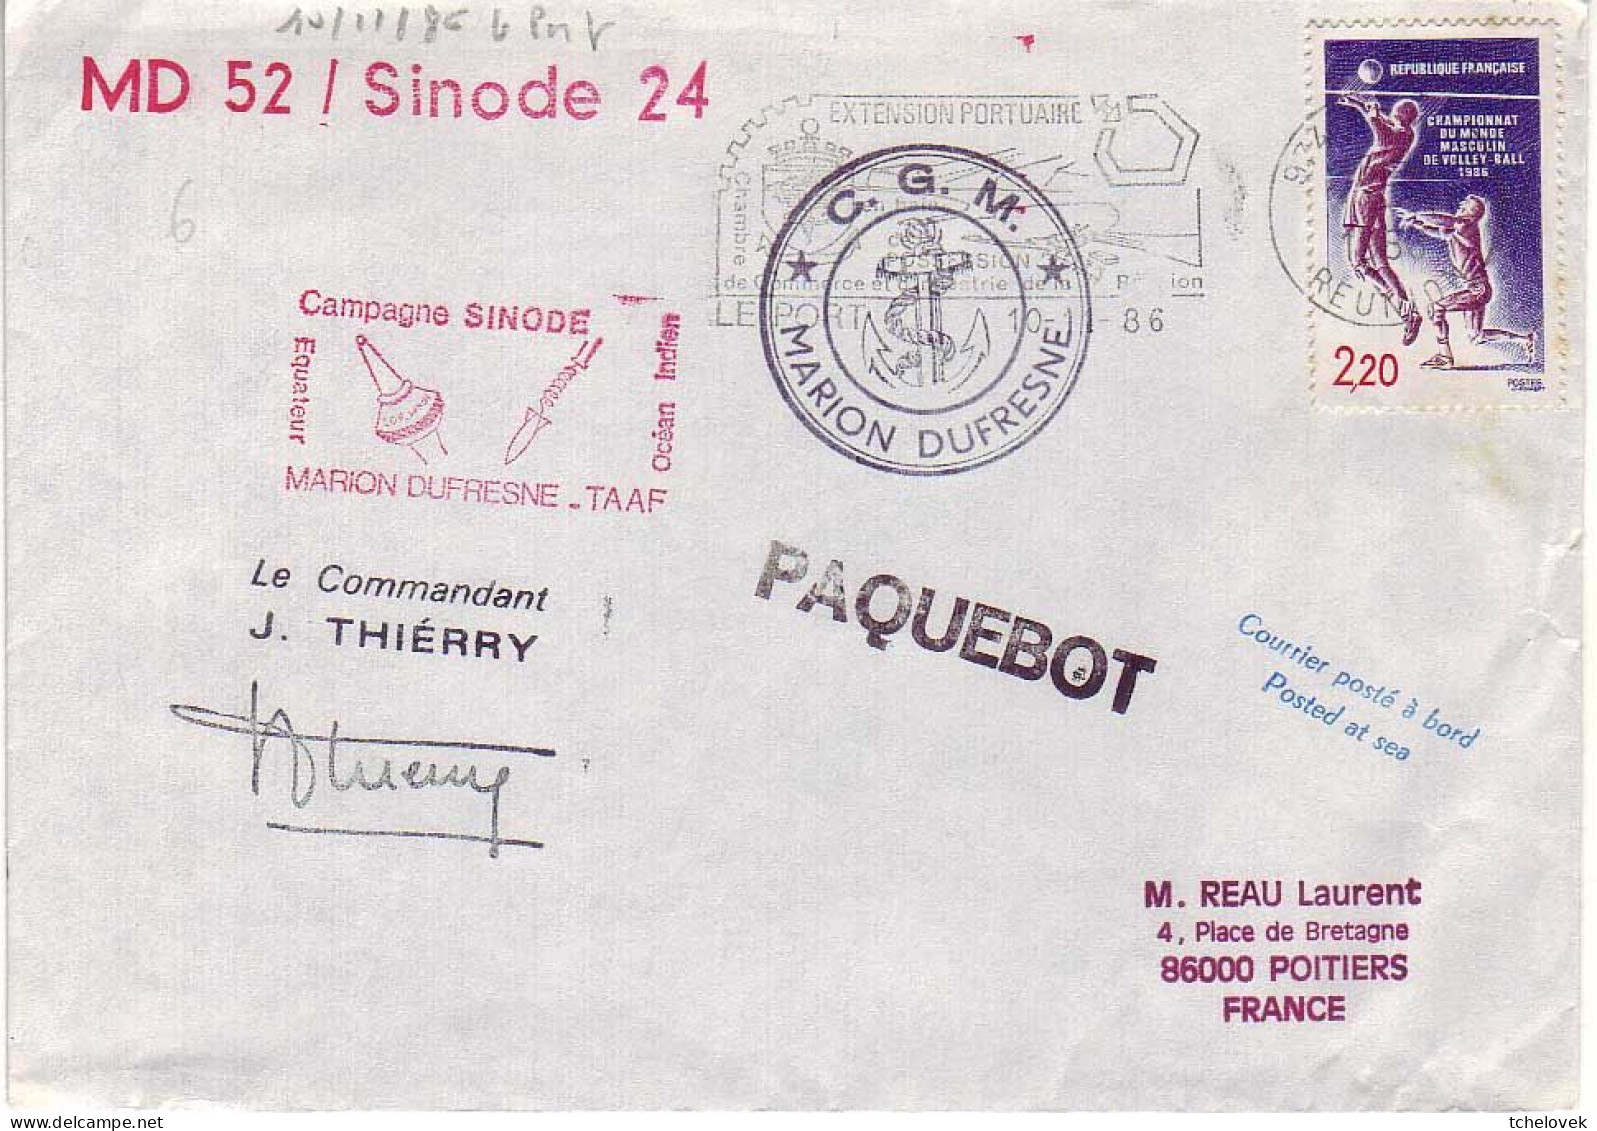 FSAT TAAF Marion Dufresne. 10.11.86 Le Port Reunion Campagne Oceanographique MD 52 Sinode 24 - Lettres & Documents